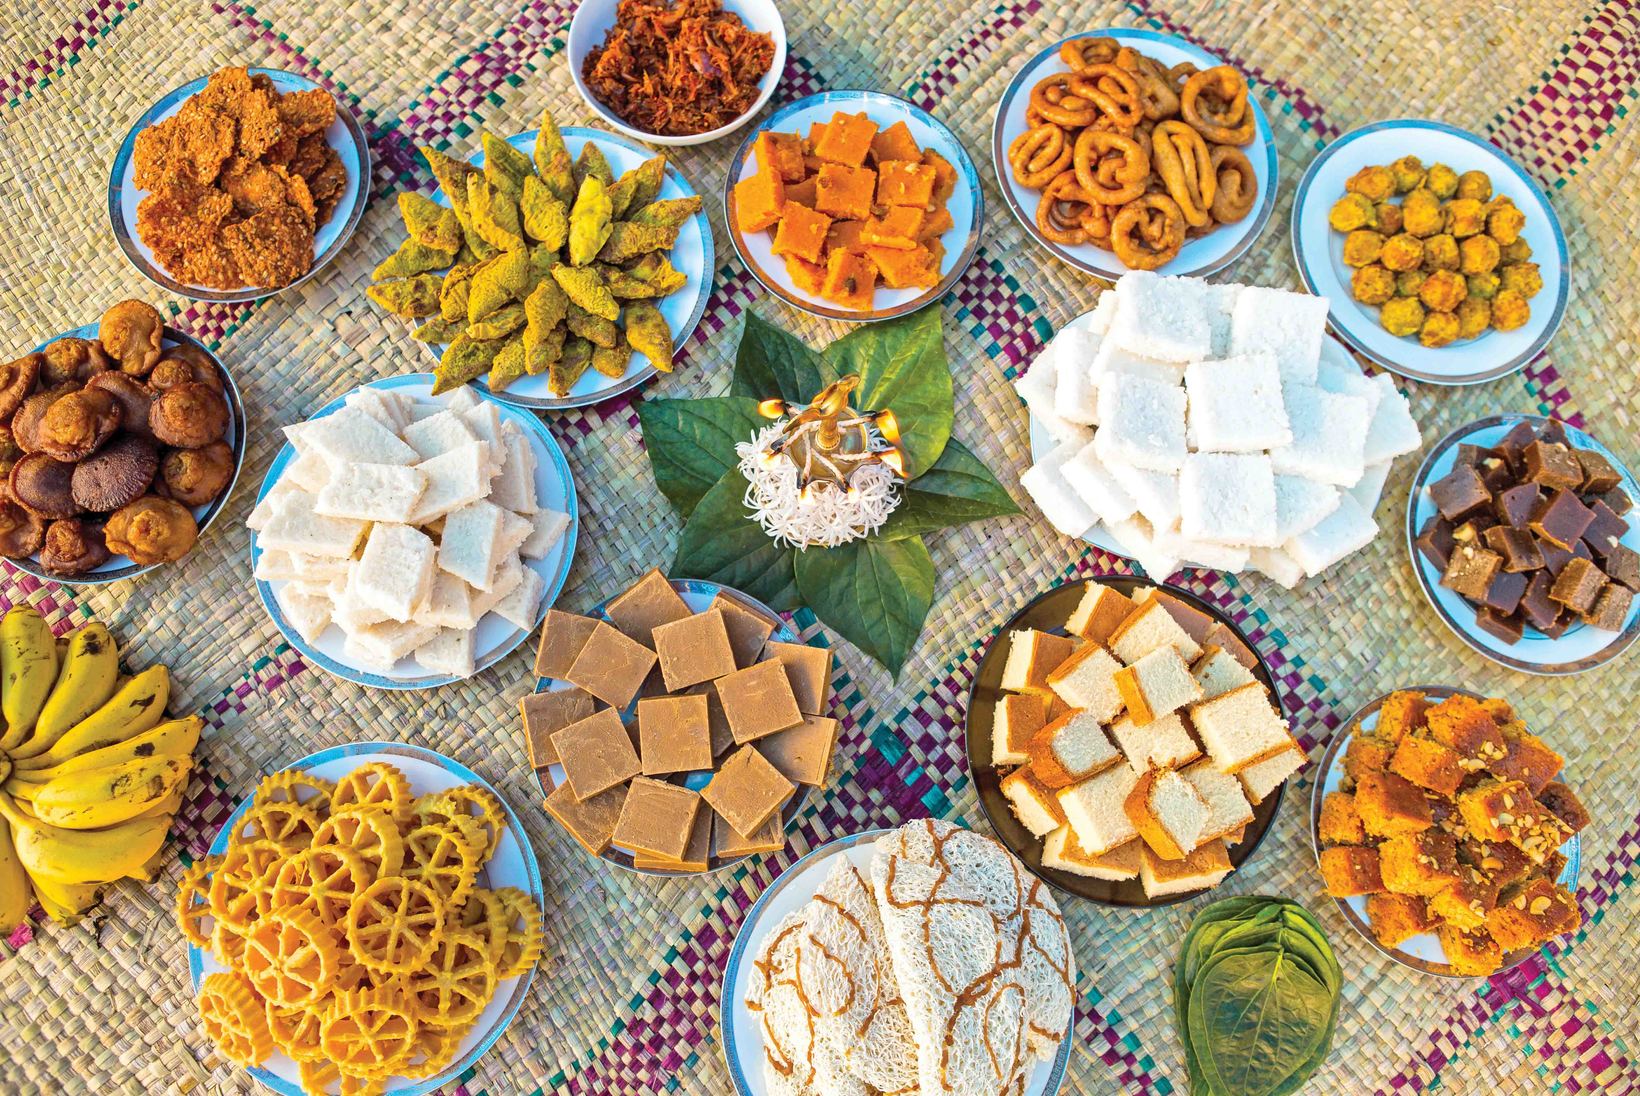 How do Aluth Avurudu sweets differ from regular desserts?